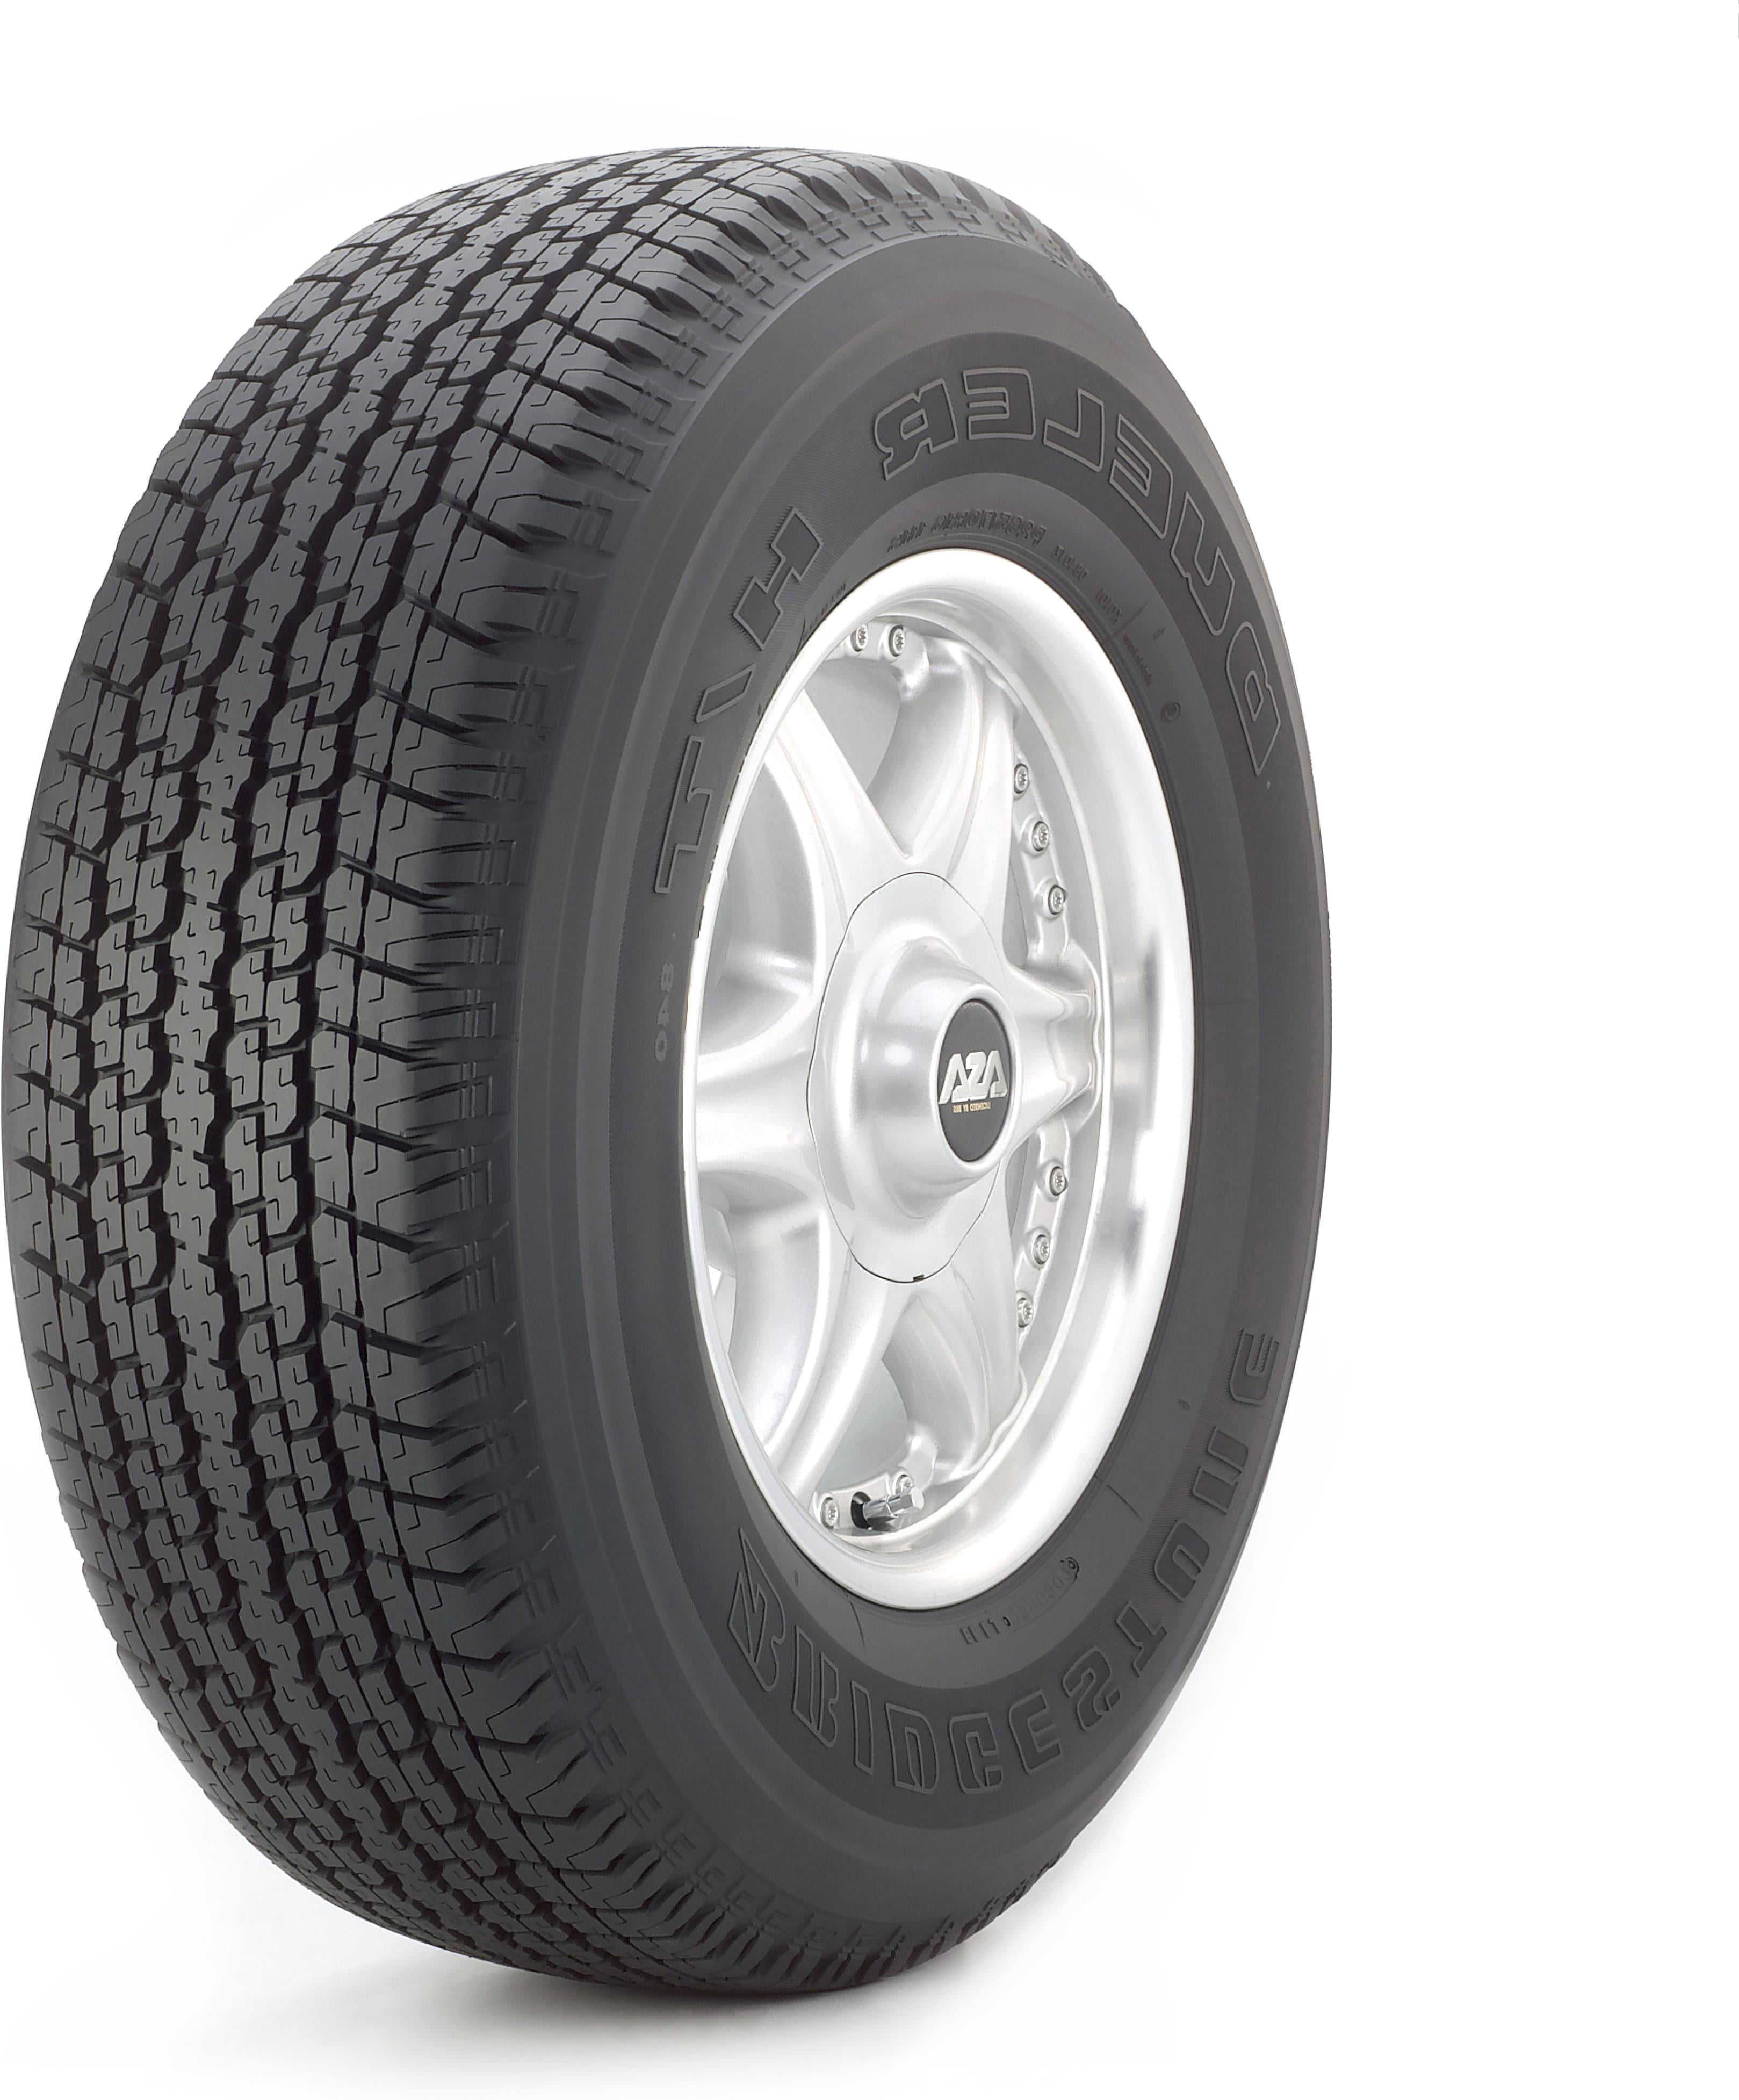 Bridgestone Dueler H/T 840 Highway All-Season Radial Tire-245/65R17 111S 